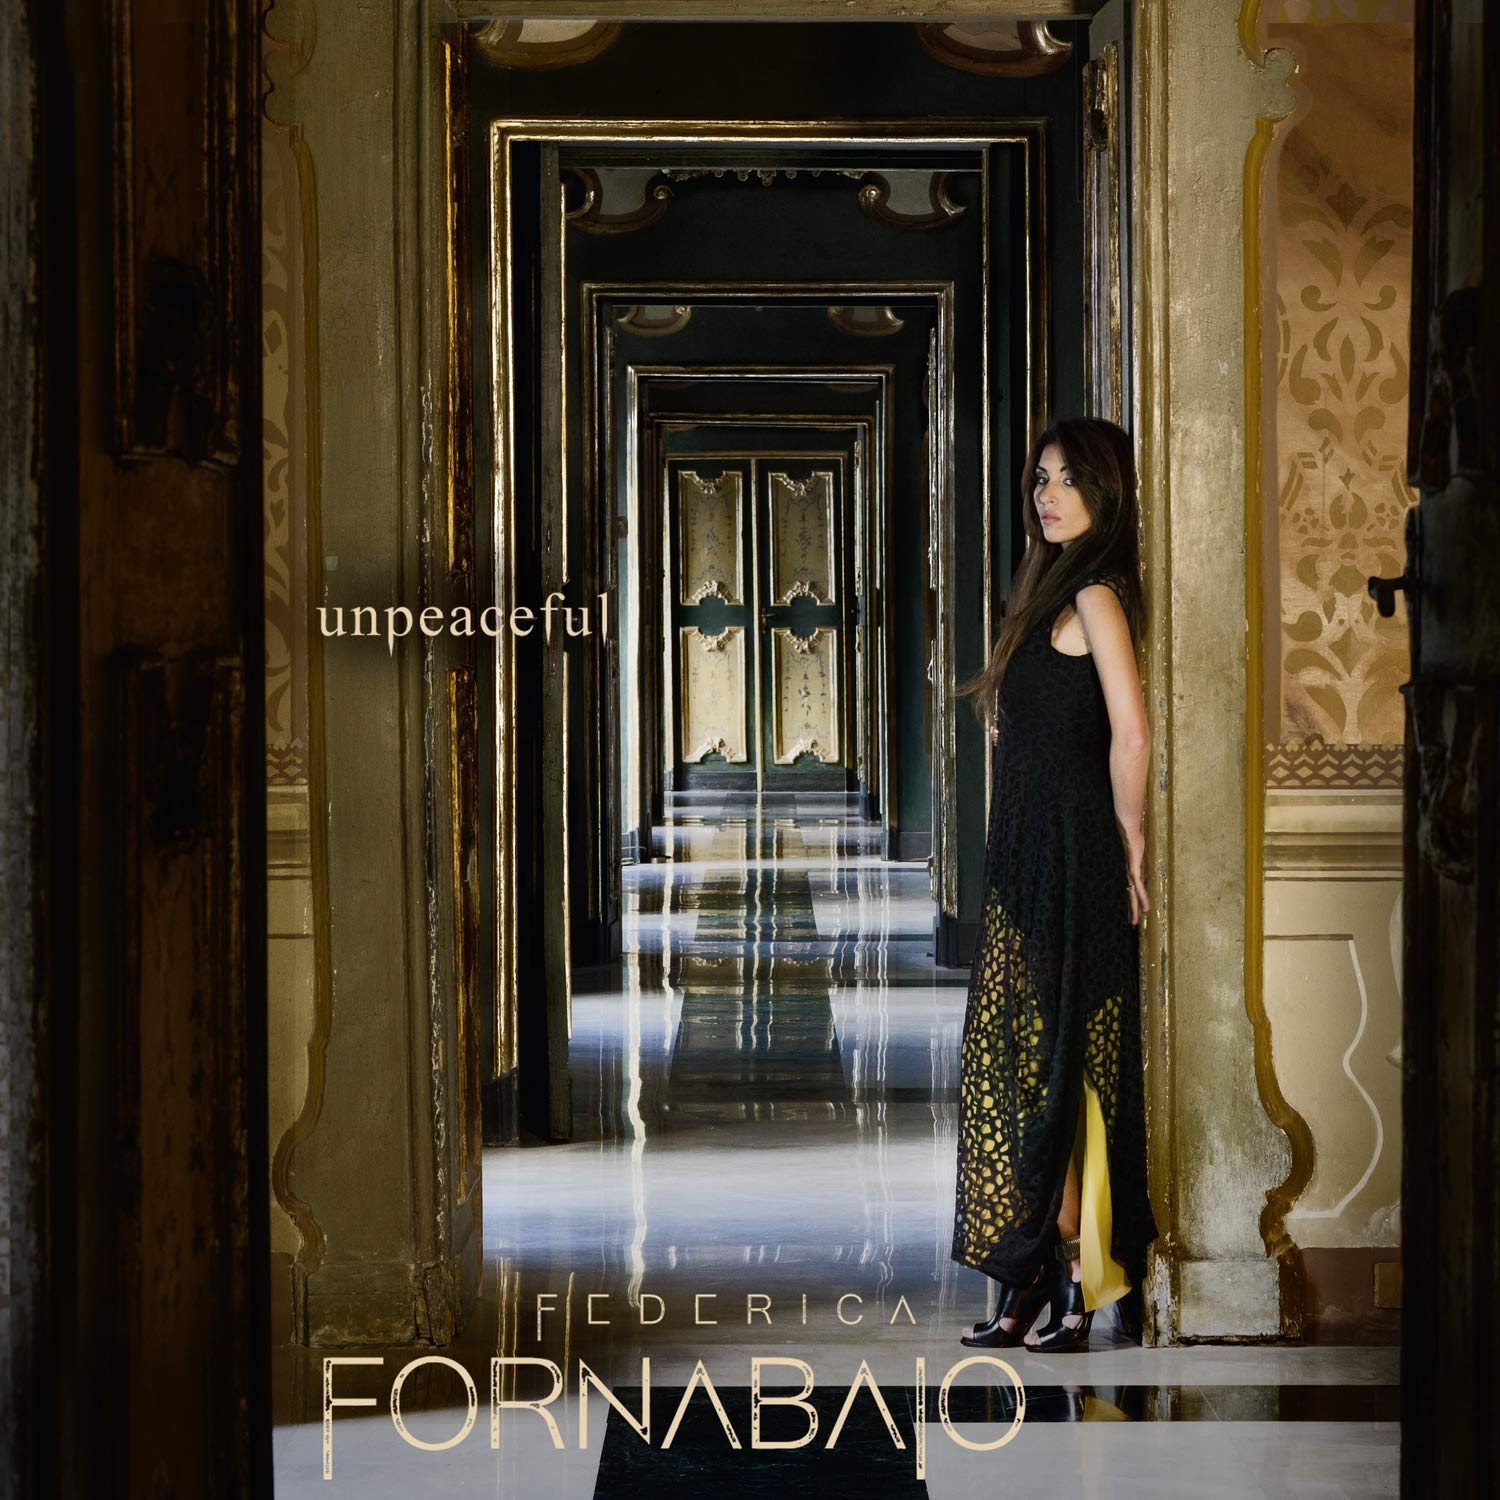 Federica Fornabaio - Unpeaceful vinyl cover